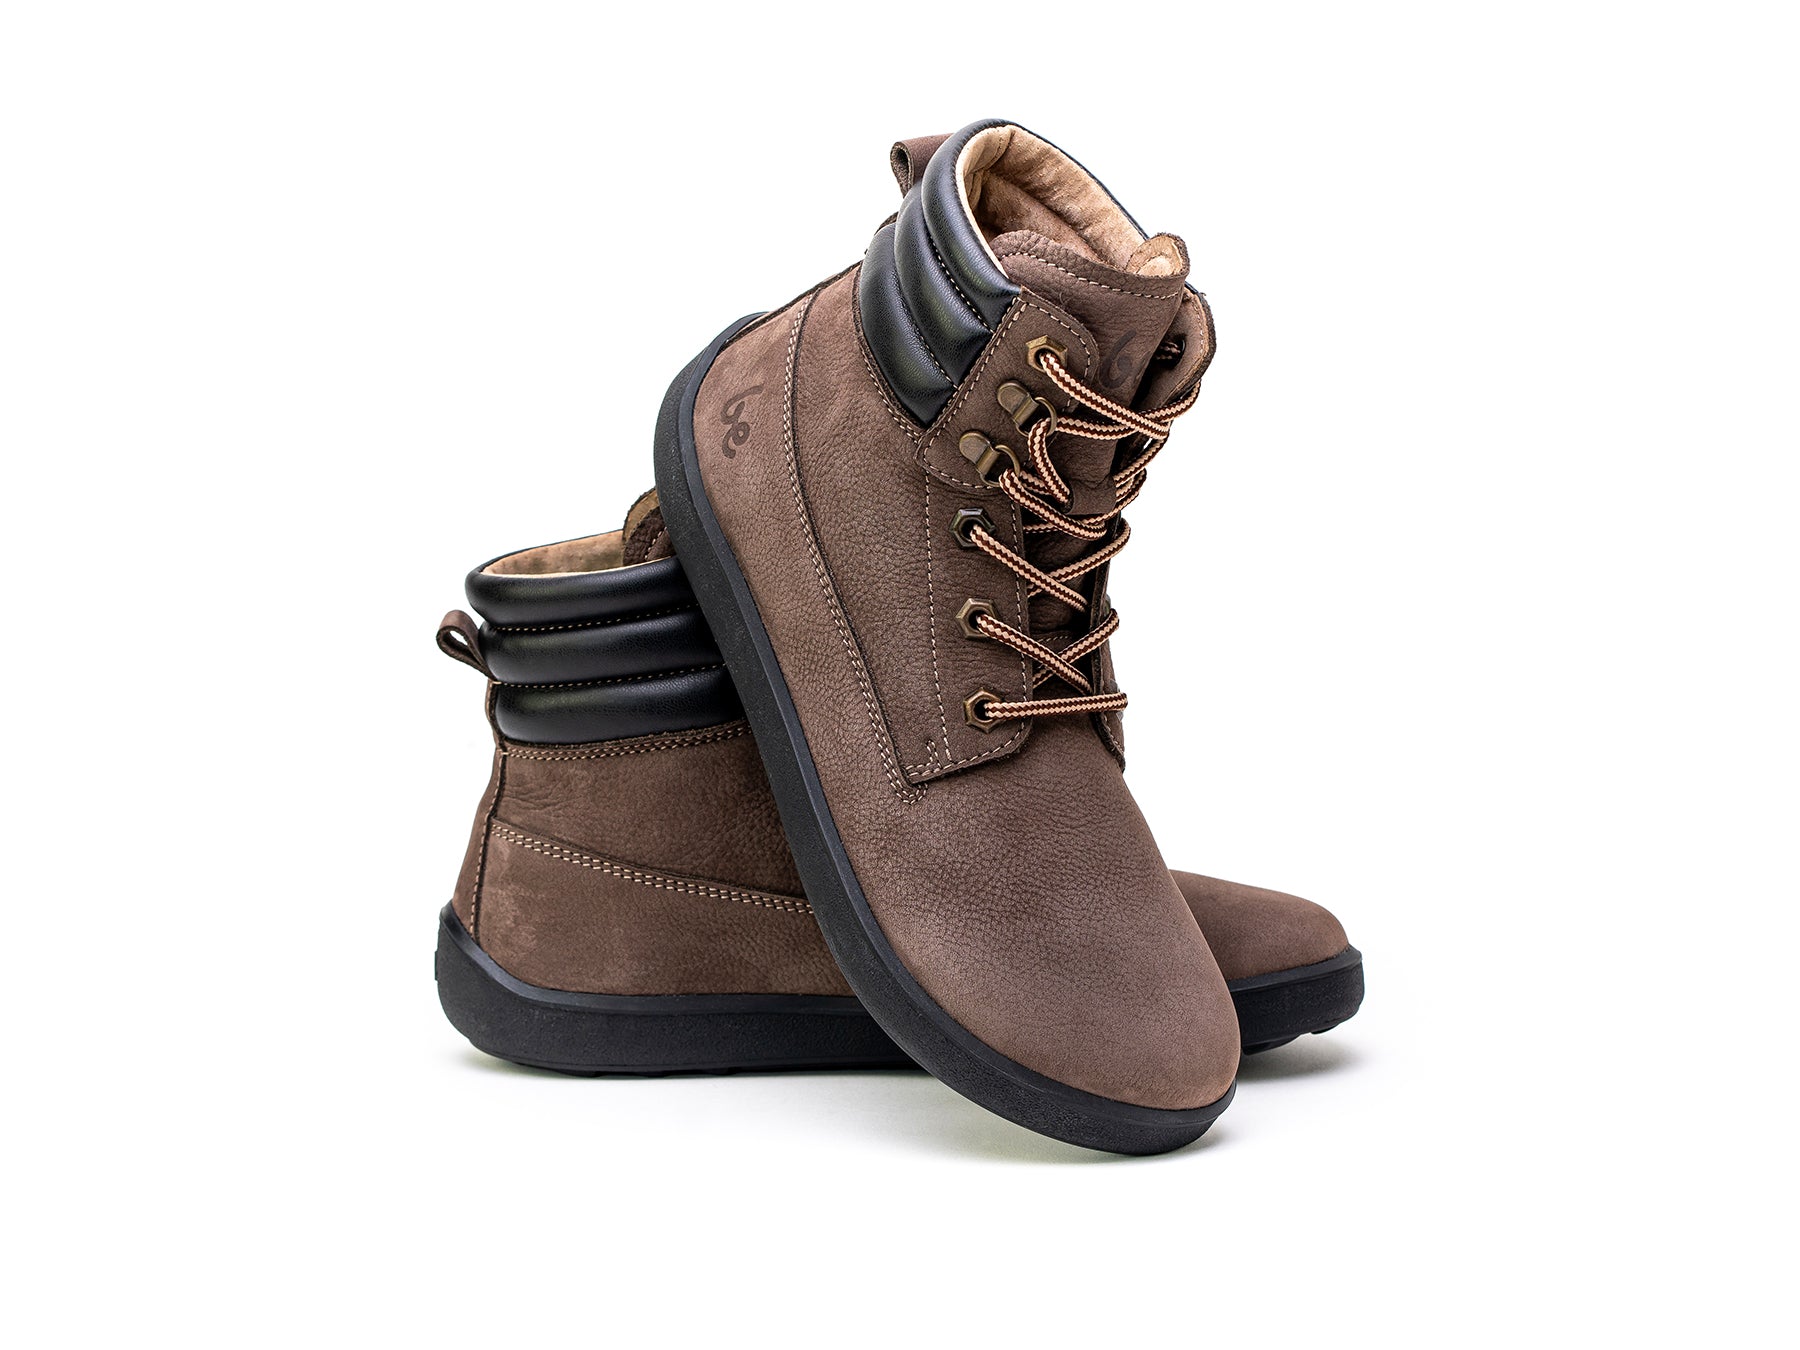 Barefoot Boots Be Lenka Nevada - Chocolate 13 OzBarefoot Australia